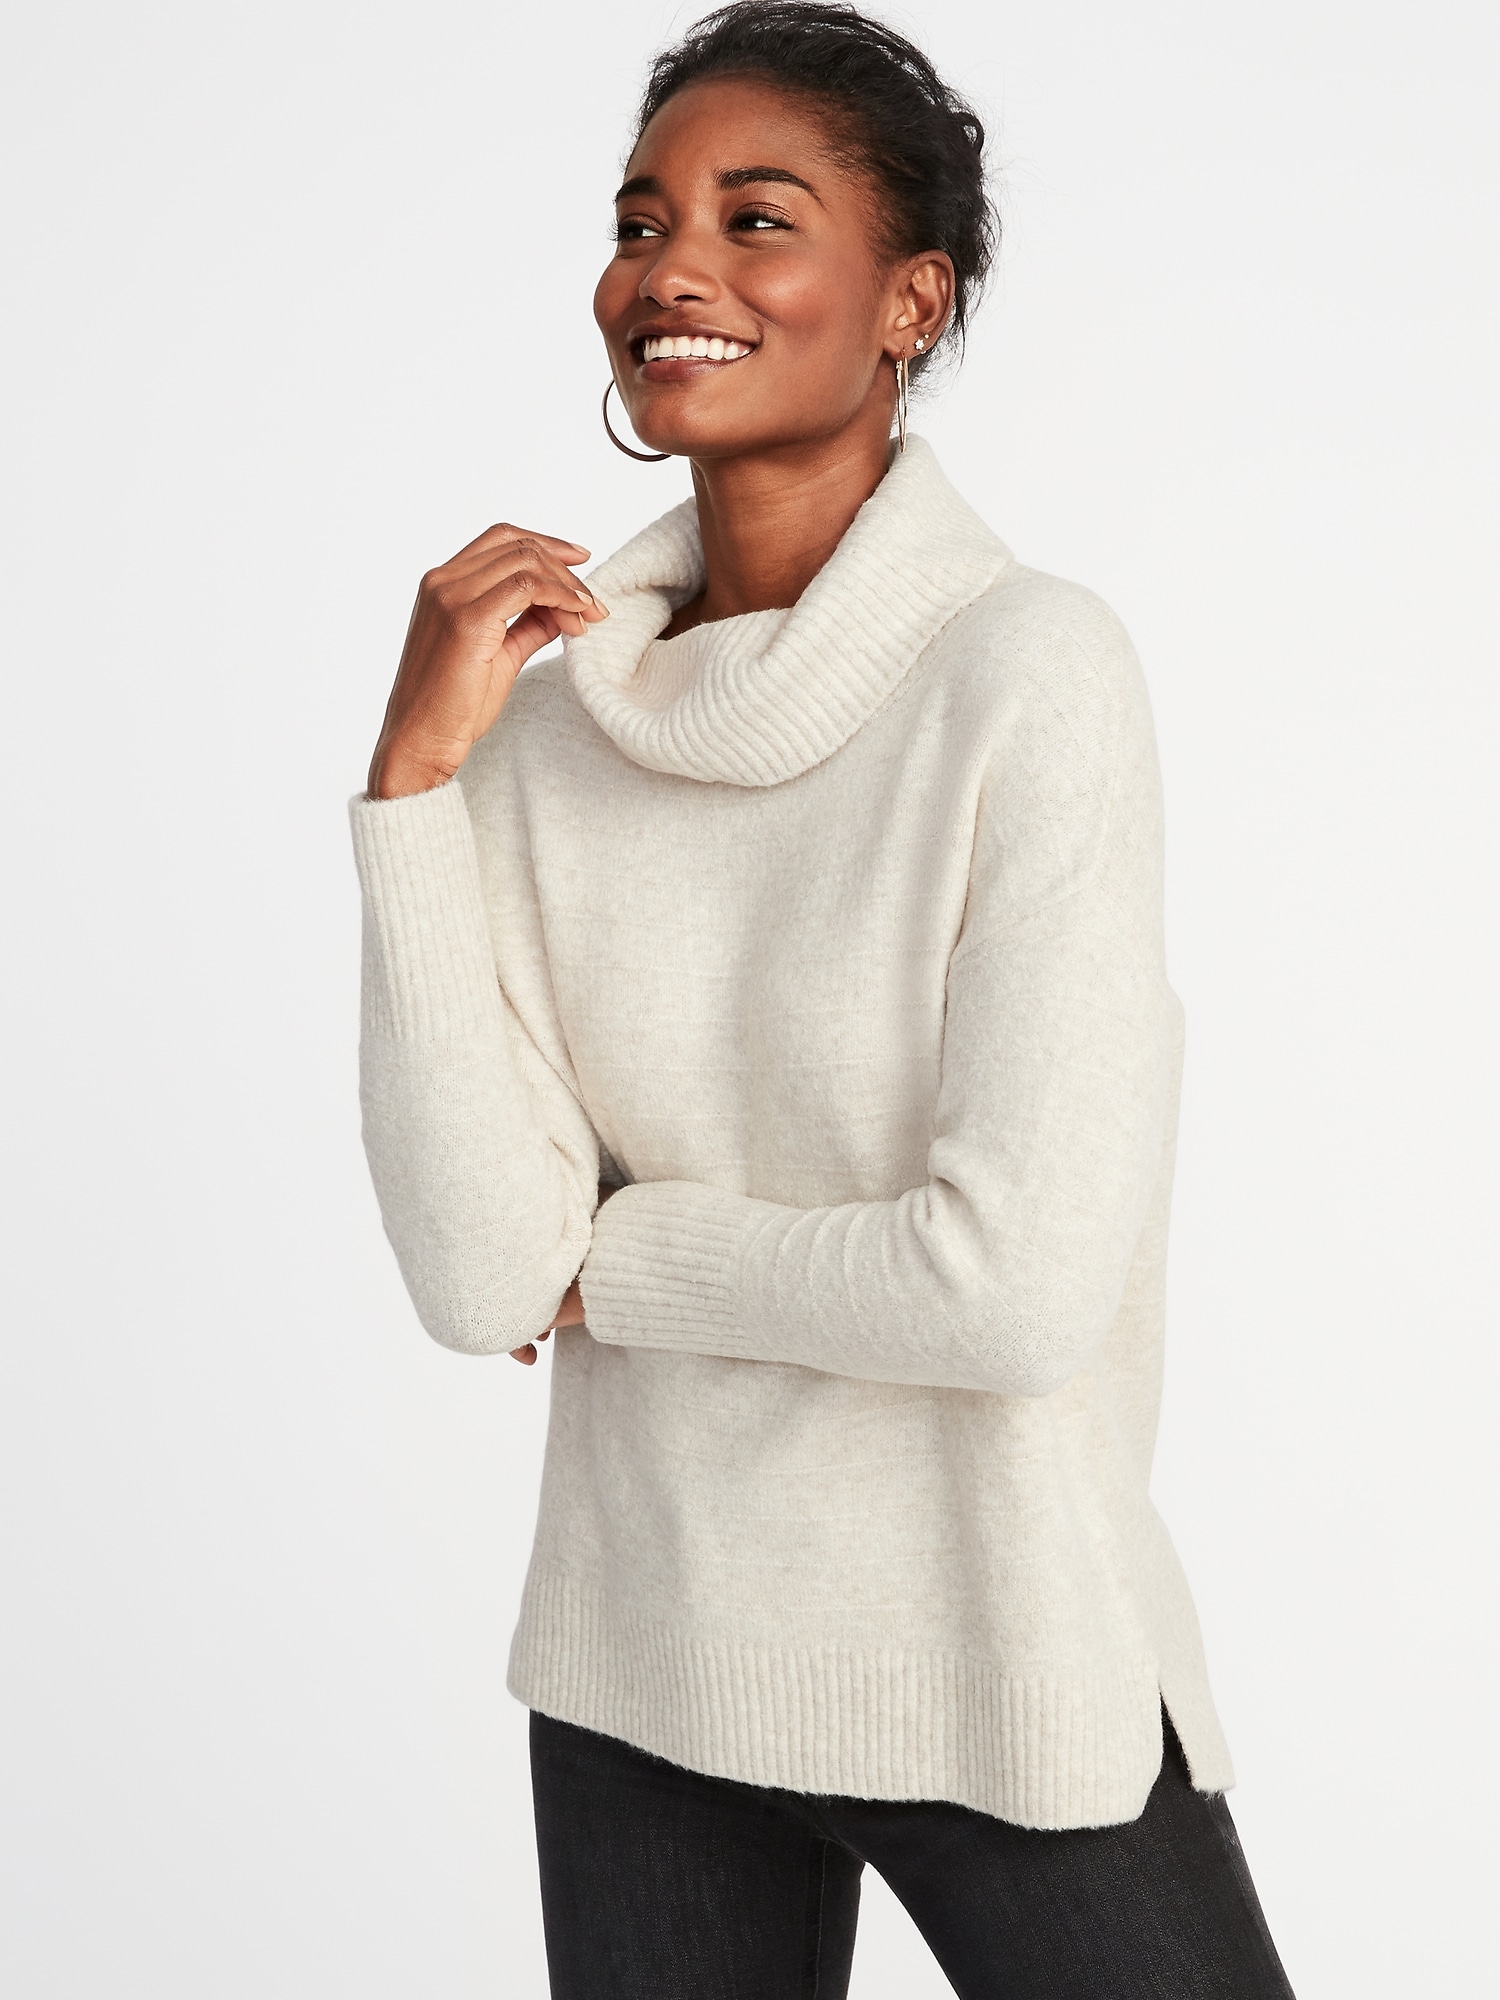 Slouchy Garter-Stitch Turtleneck Sweater for Women | Old Navy